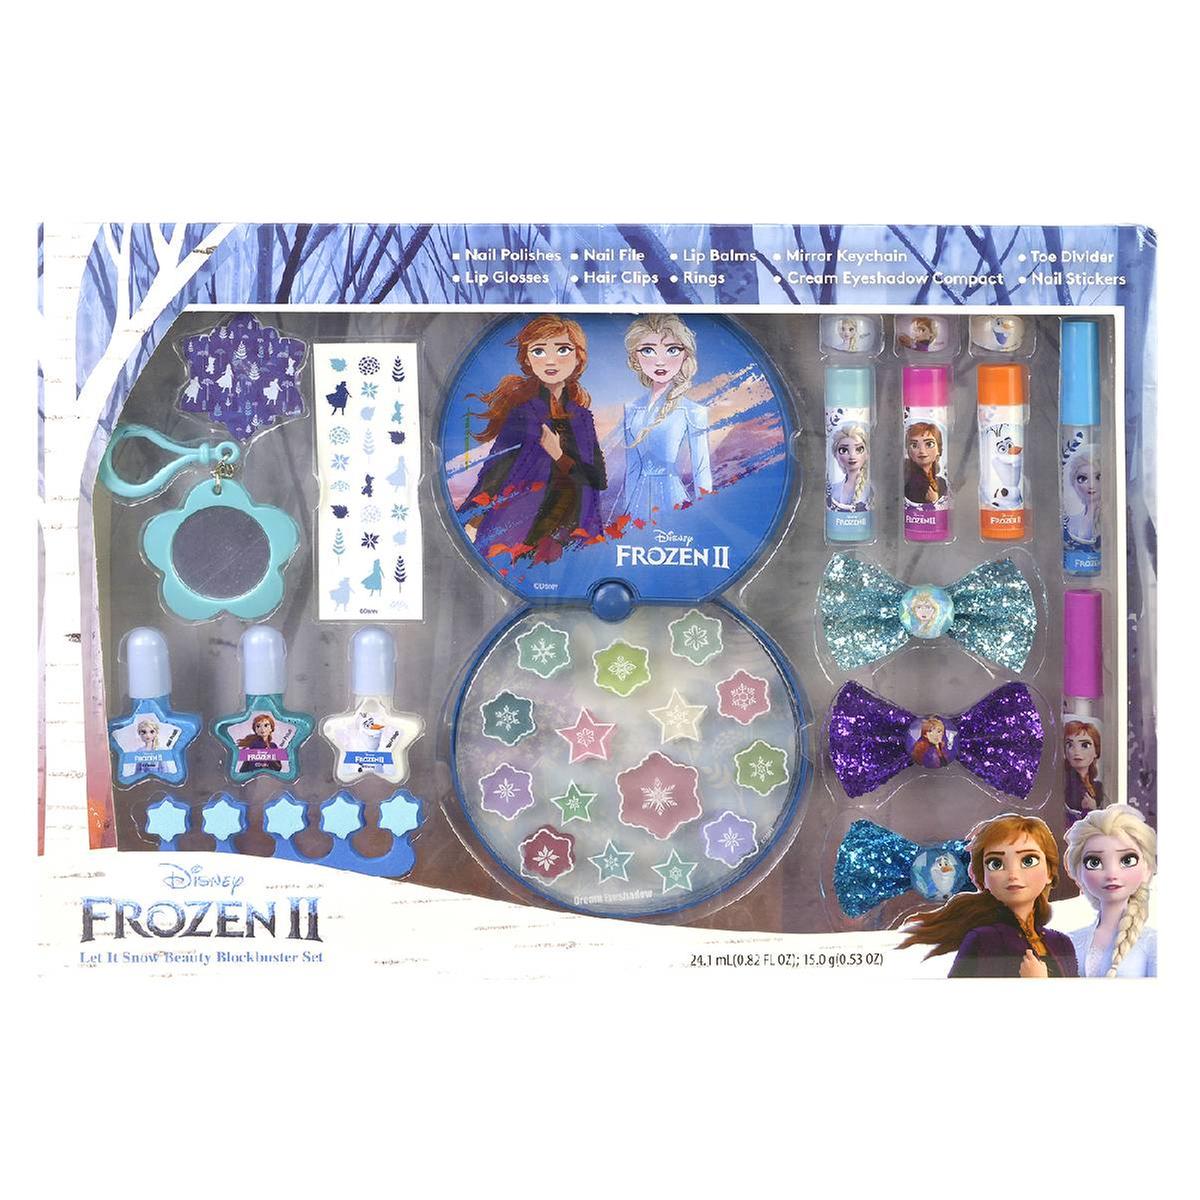 Frozen - Set de maquillaje y complementos Let It Snow - Frozen 2 | Disney |  Toys"R"Us España